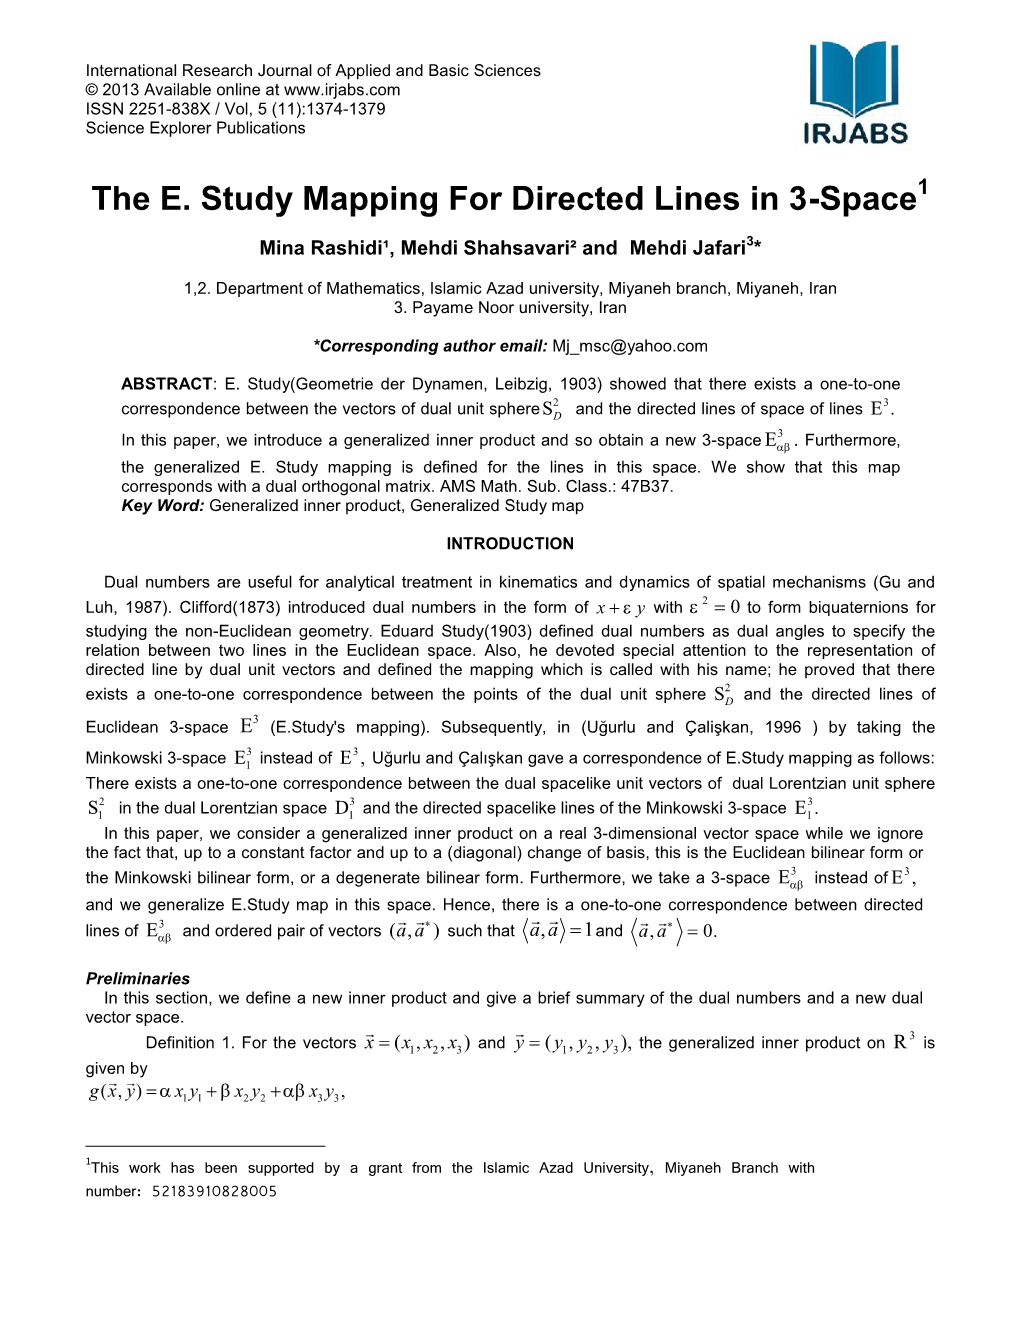 The E. Study Mapping for Directed Lines in 3-Space1 Mina Rashidi¹, Mehdi Shahsavari² and Mehdi Jafari3*